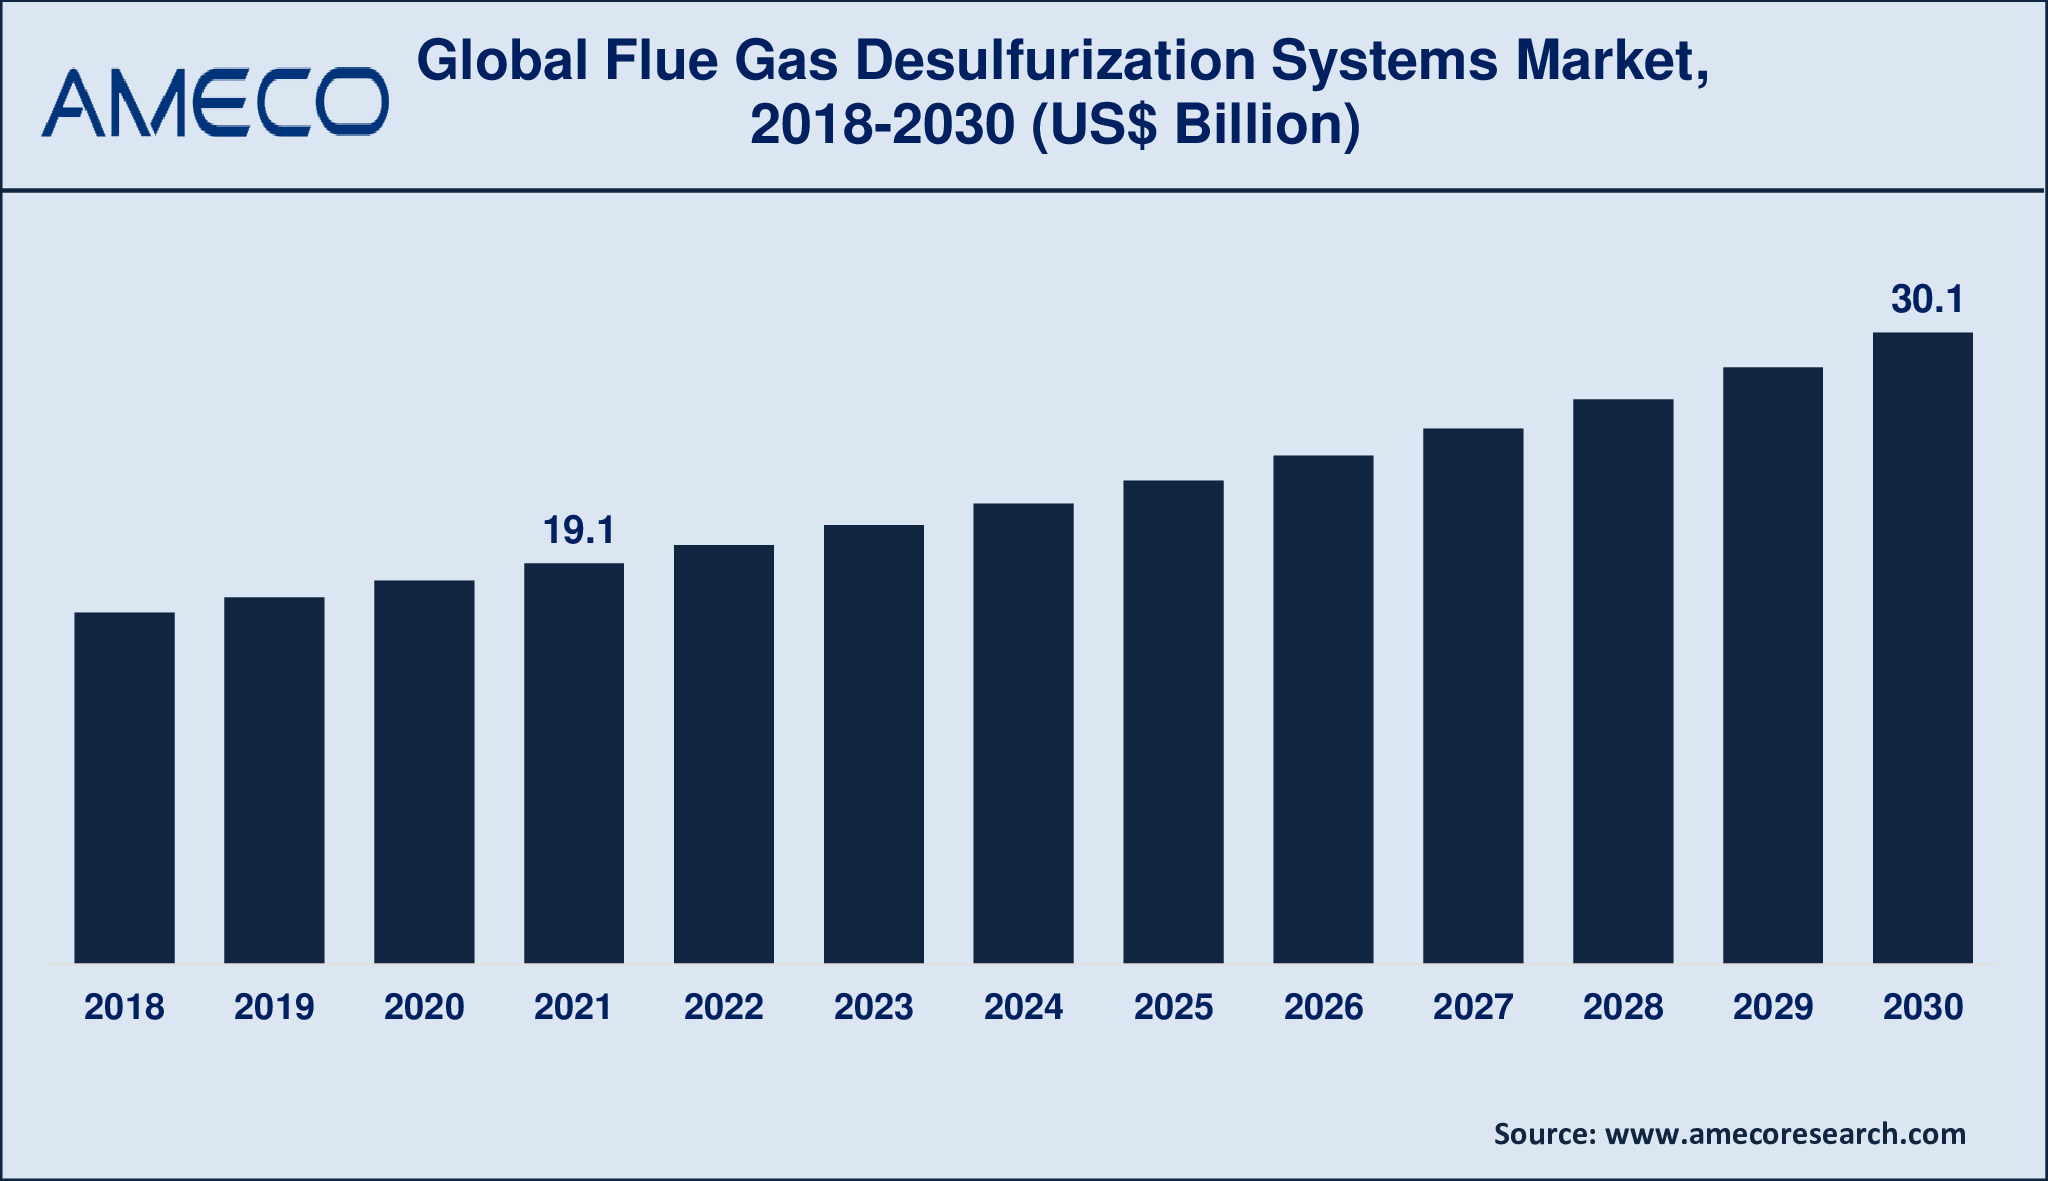 Flue Gas Desulfurization Systems Market CAGR